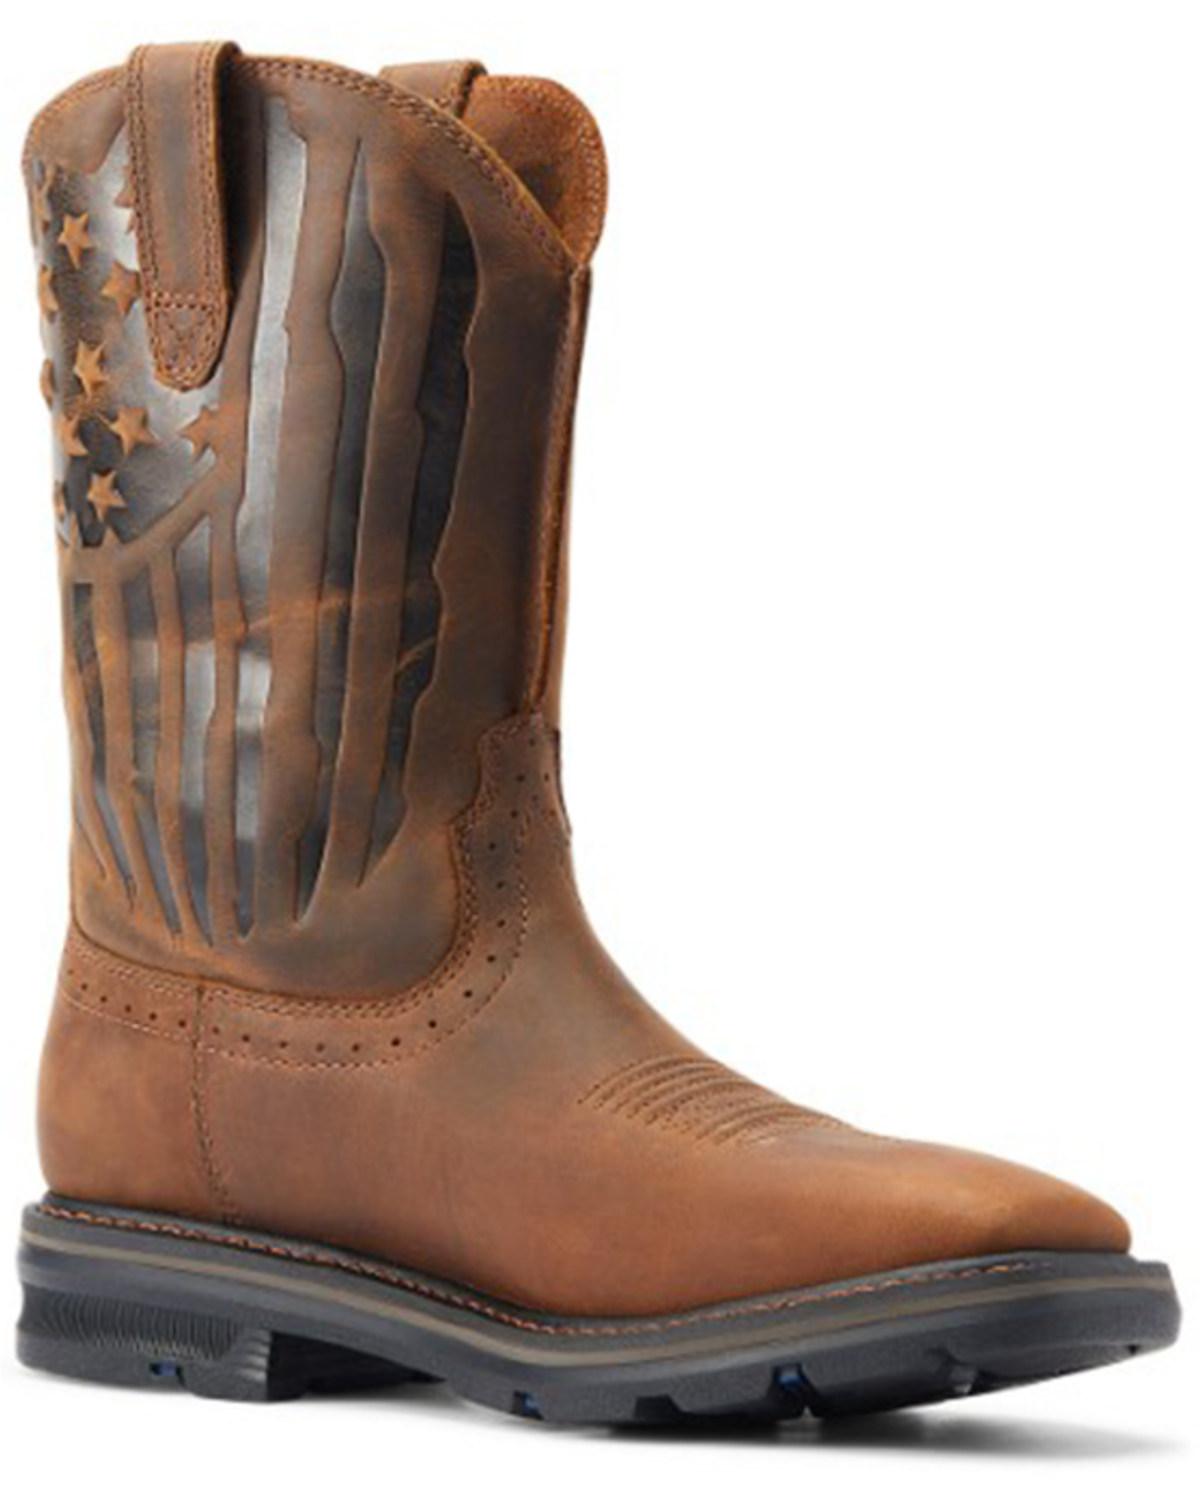 Ariat Men's Sierra Shock Shield Patriotic Western Work Boots - Broad Square Toe